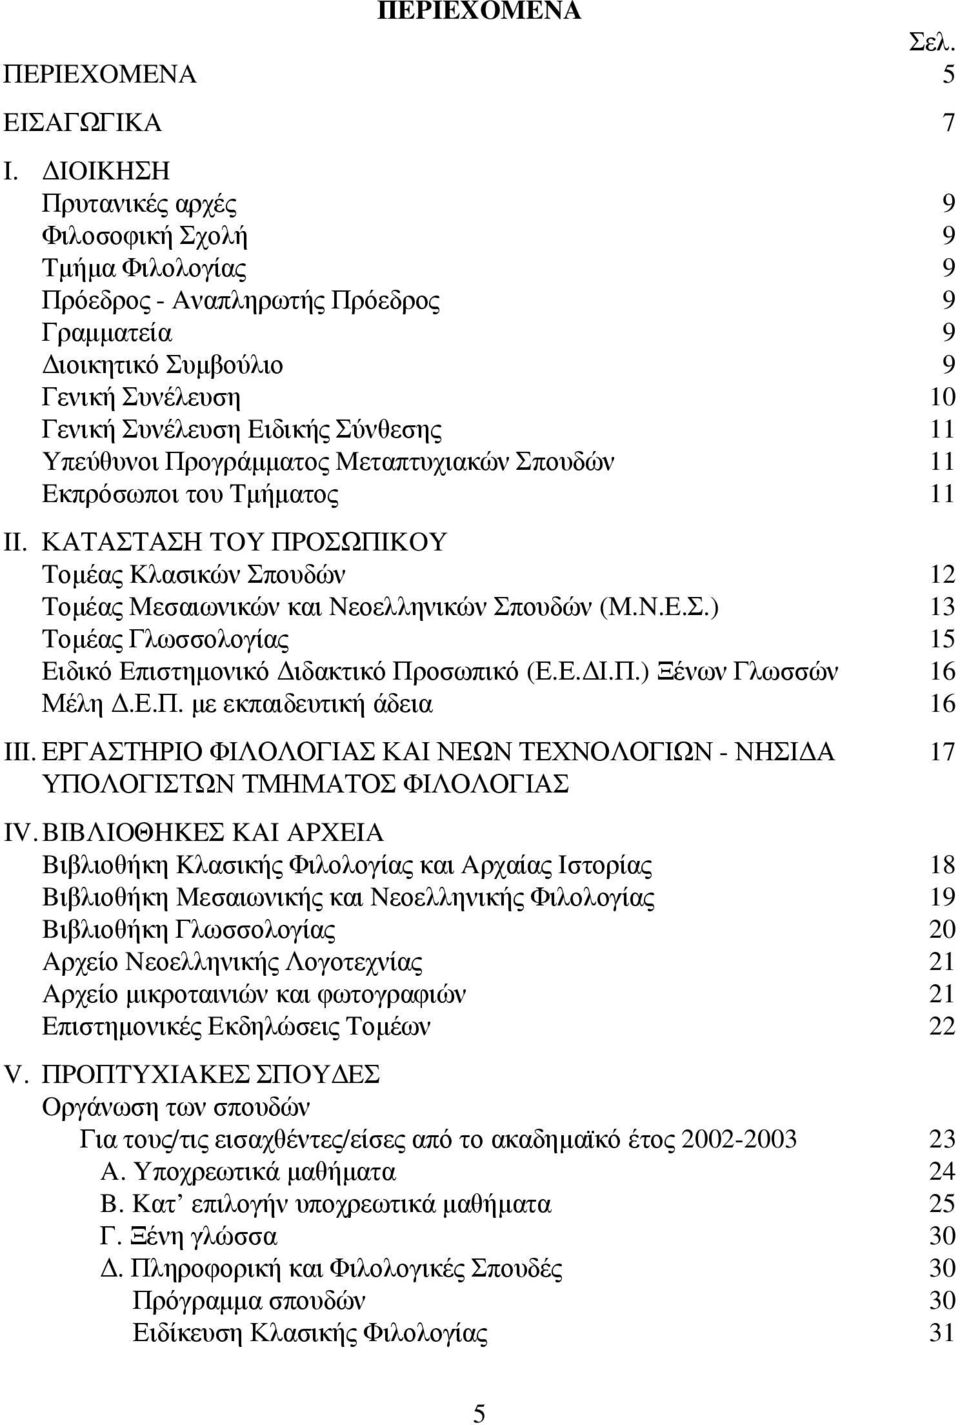 Yπεύθυνοι Προγράμματος Mεταπτυχιακών Σπουδών 11 Eκπρόσωποι του Tμήματος 11 II. ΚΑΤΑΣΤΑΣΗ TOY ΠPOΣΩΠIKOY Tομέας Kλασικών Σπουδών 12 Tομέας Mεσαιωνικών και Nεοελληνικών Σπουδών (M.N.E.Σ.) 13 Tομέας Γλωσσολογίας 15 Eιδικό Eπιστημονικό Διδακτικό Προσωπικό (Ε.